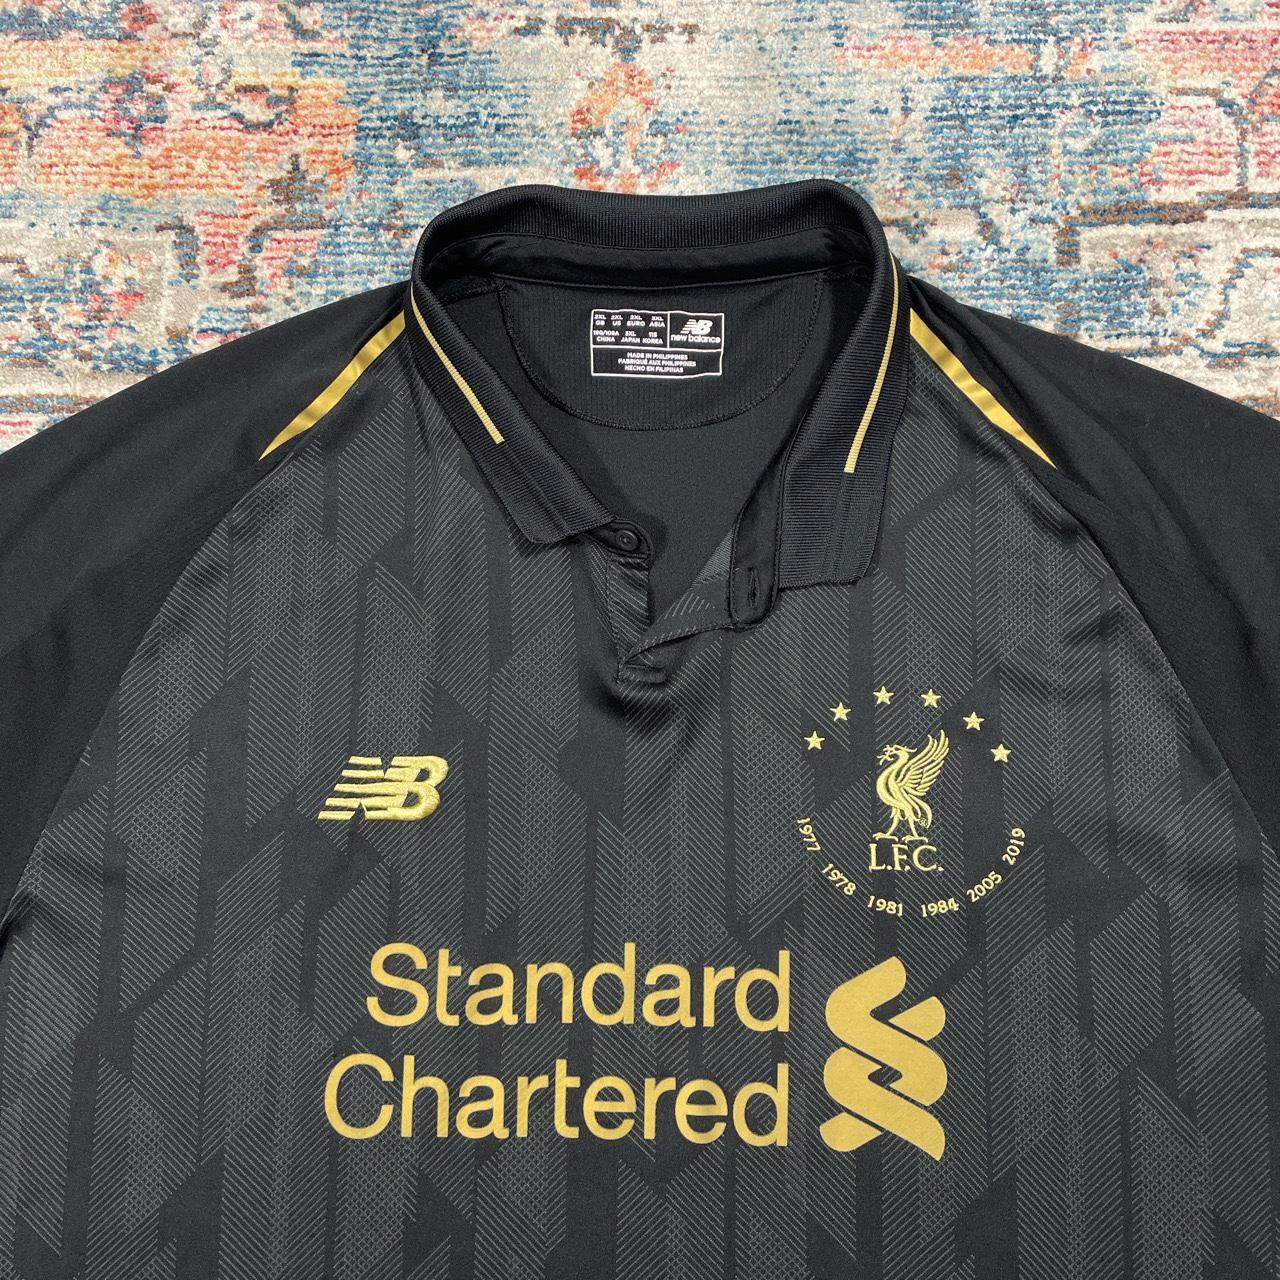 Liverpool New Balance 2018/19 Blackout Football Shirt